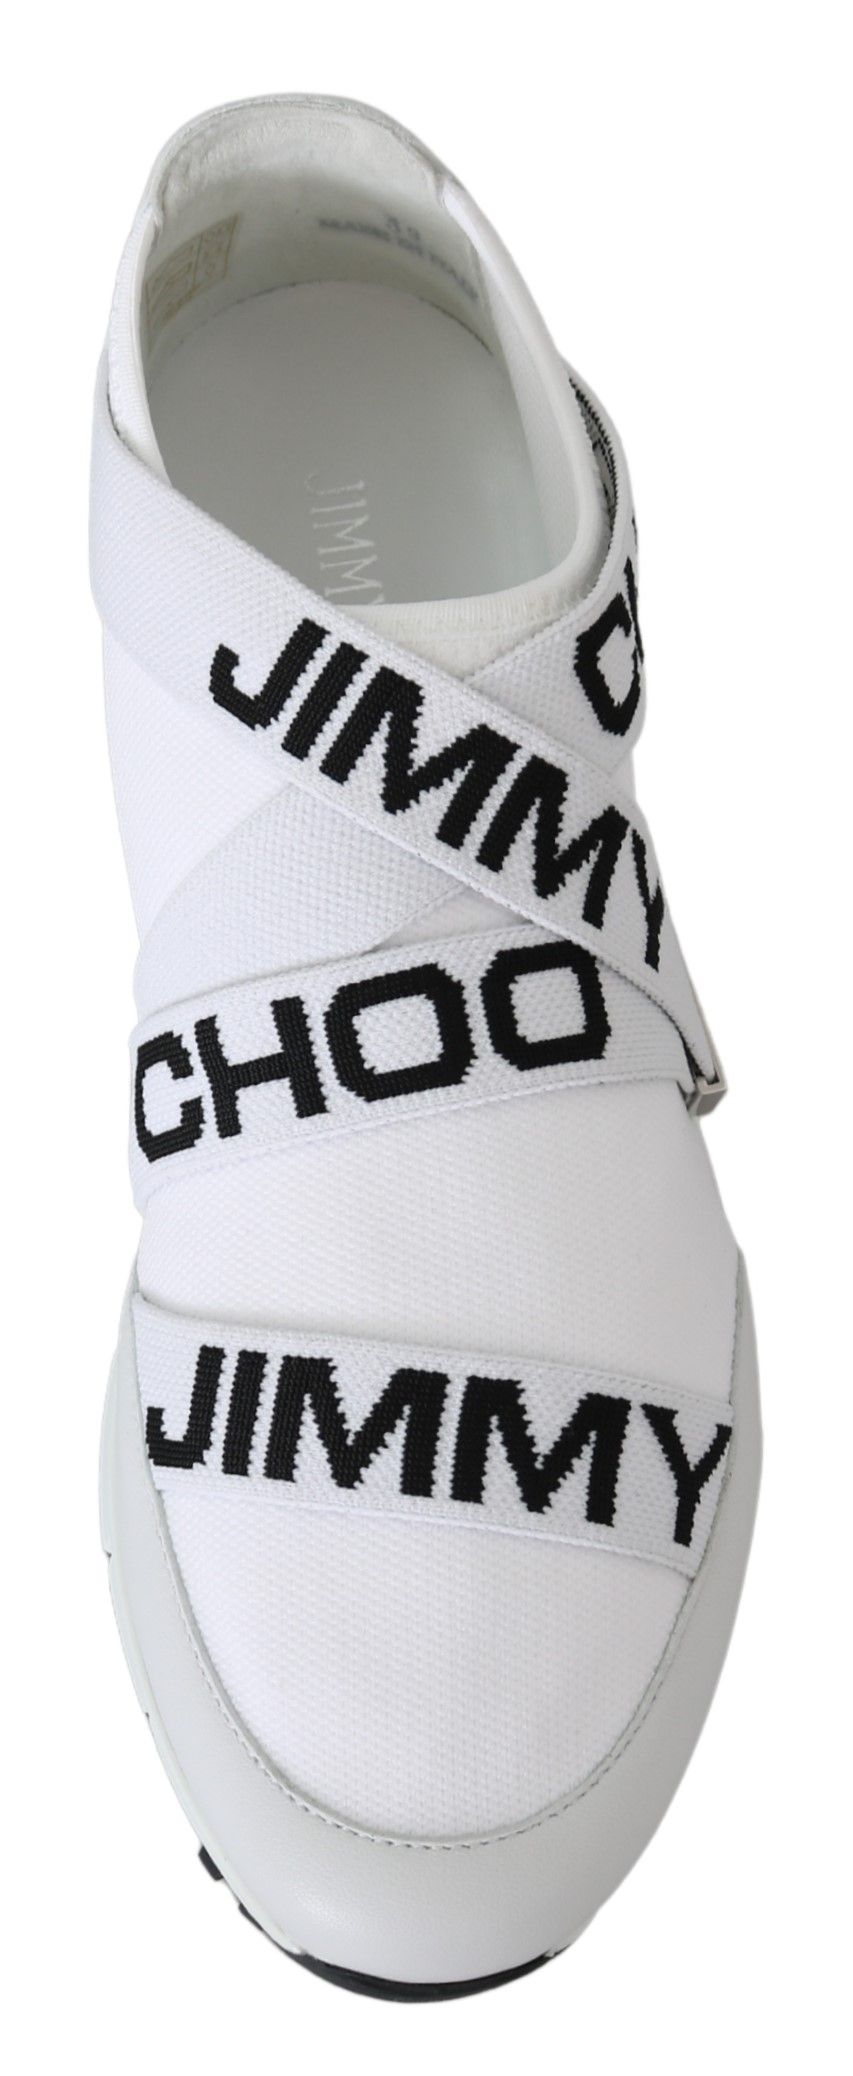 Fashionsarah.com Fashionsarah.com Jimmy Choo Toronto White/Black Nappa/Knit Sneakers